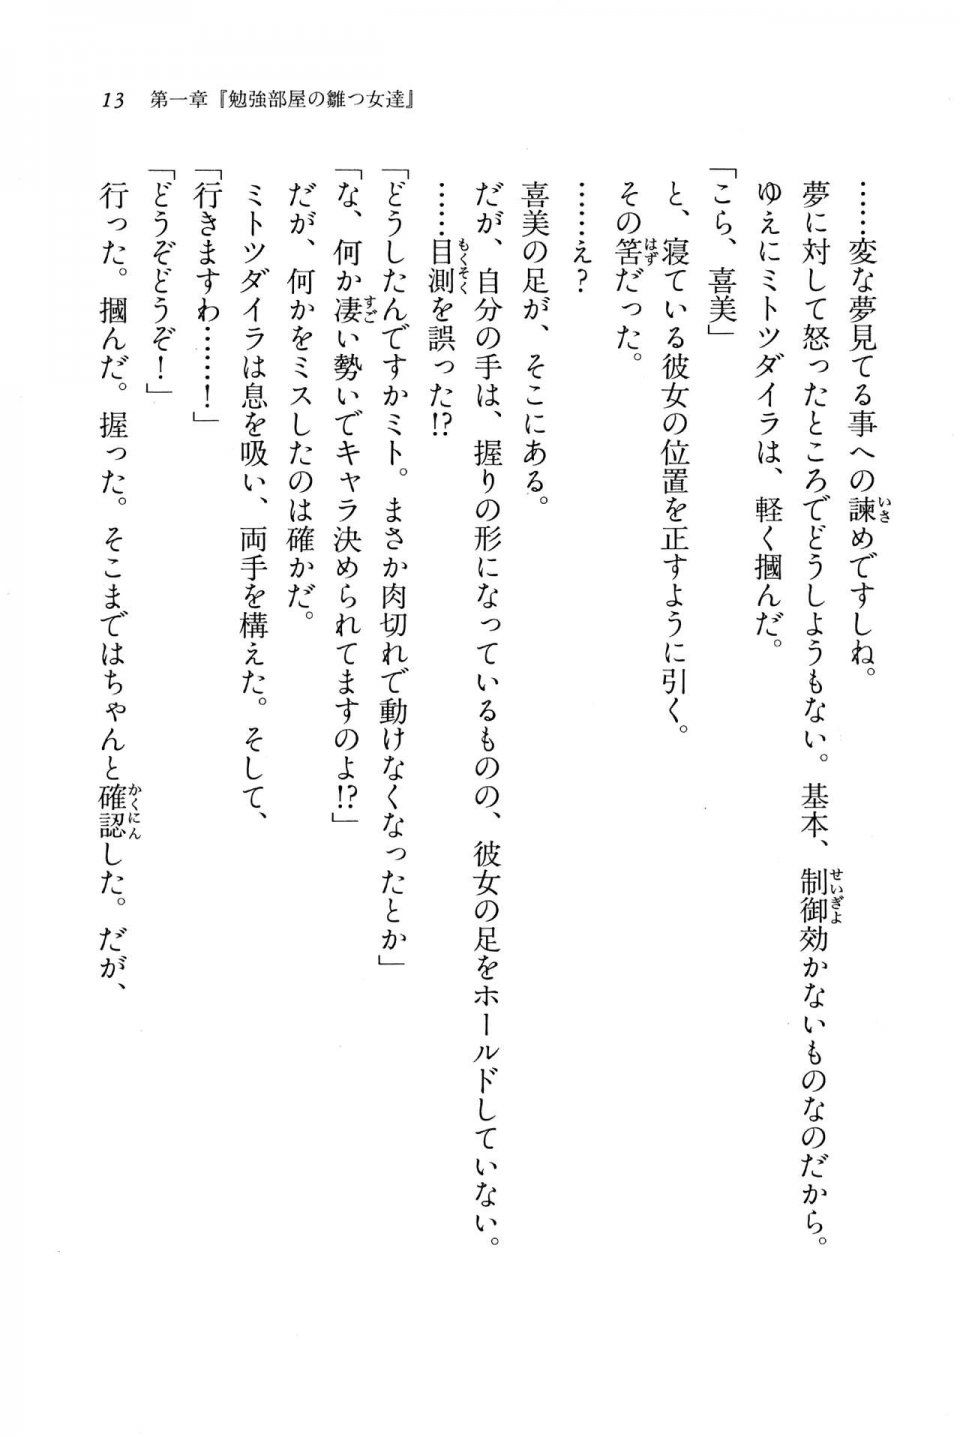 Kyoukai Senjou no Horizon BD Special Mininovel Vol 7(4A) - Photo #17